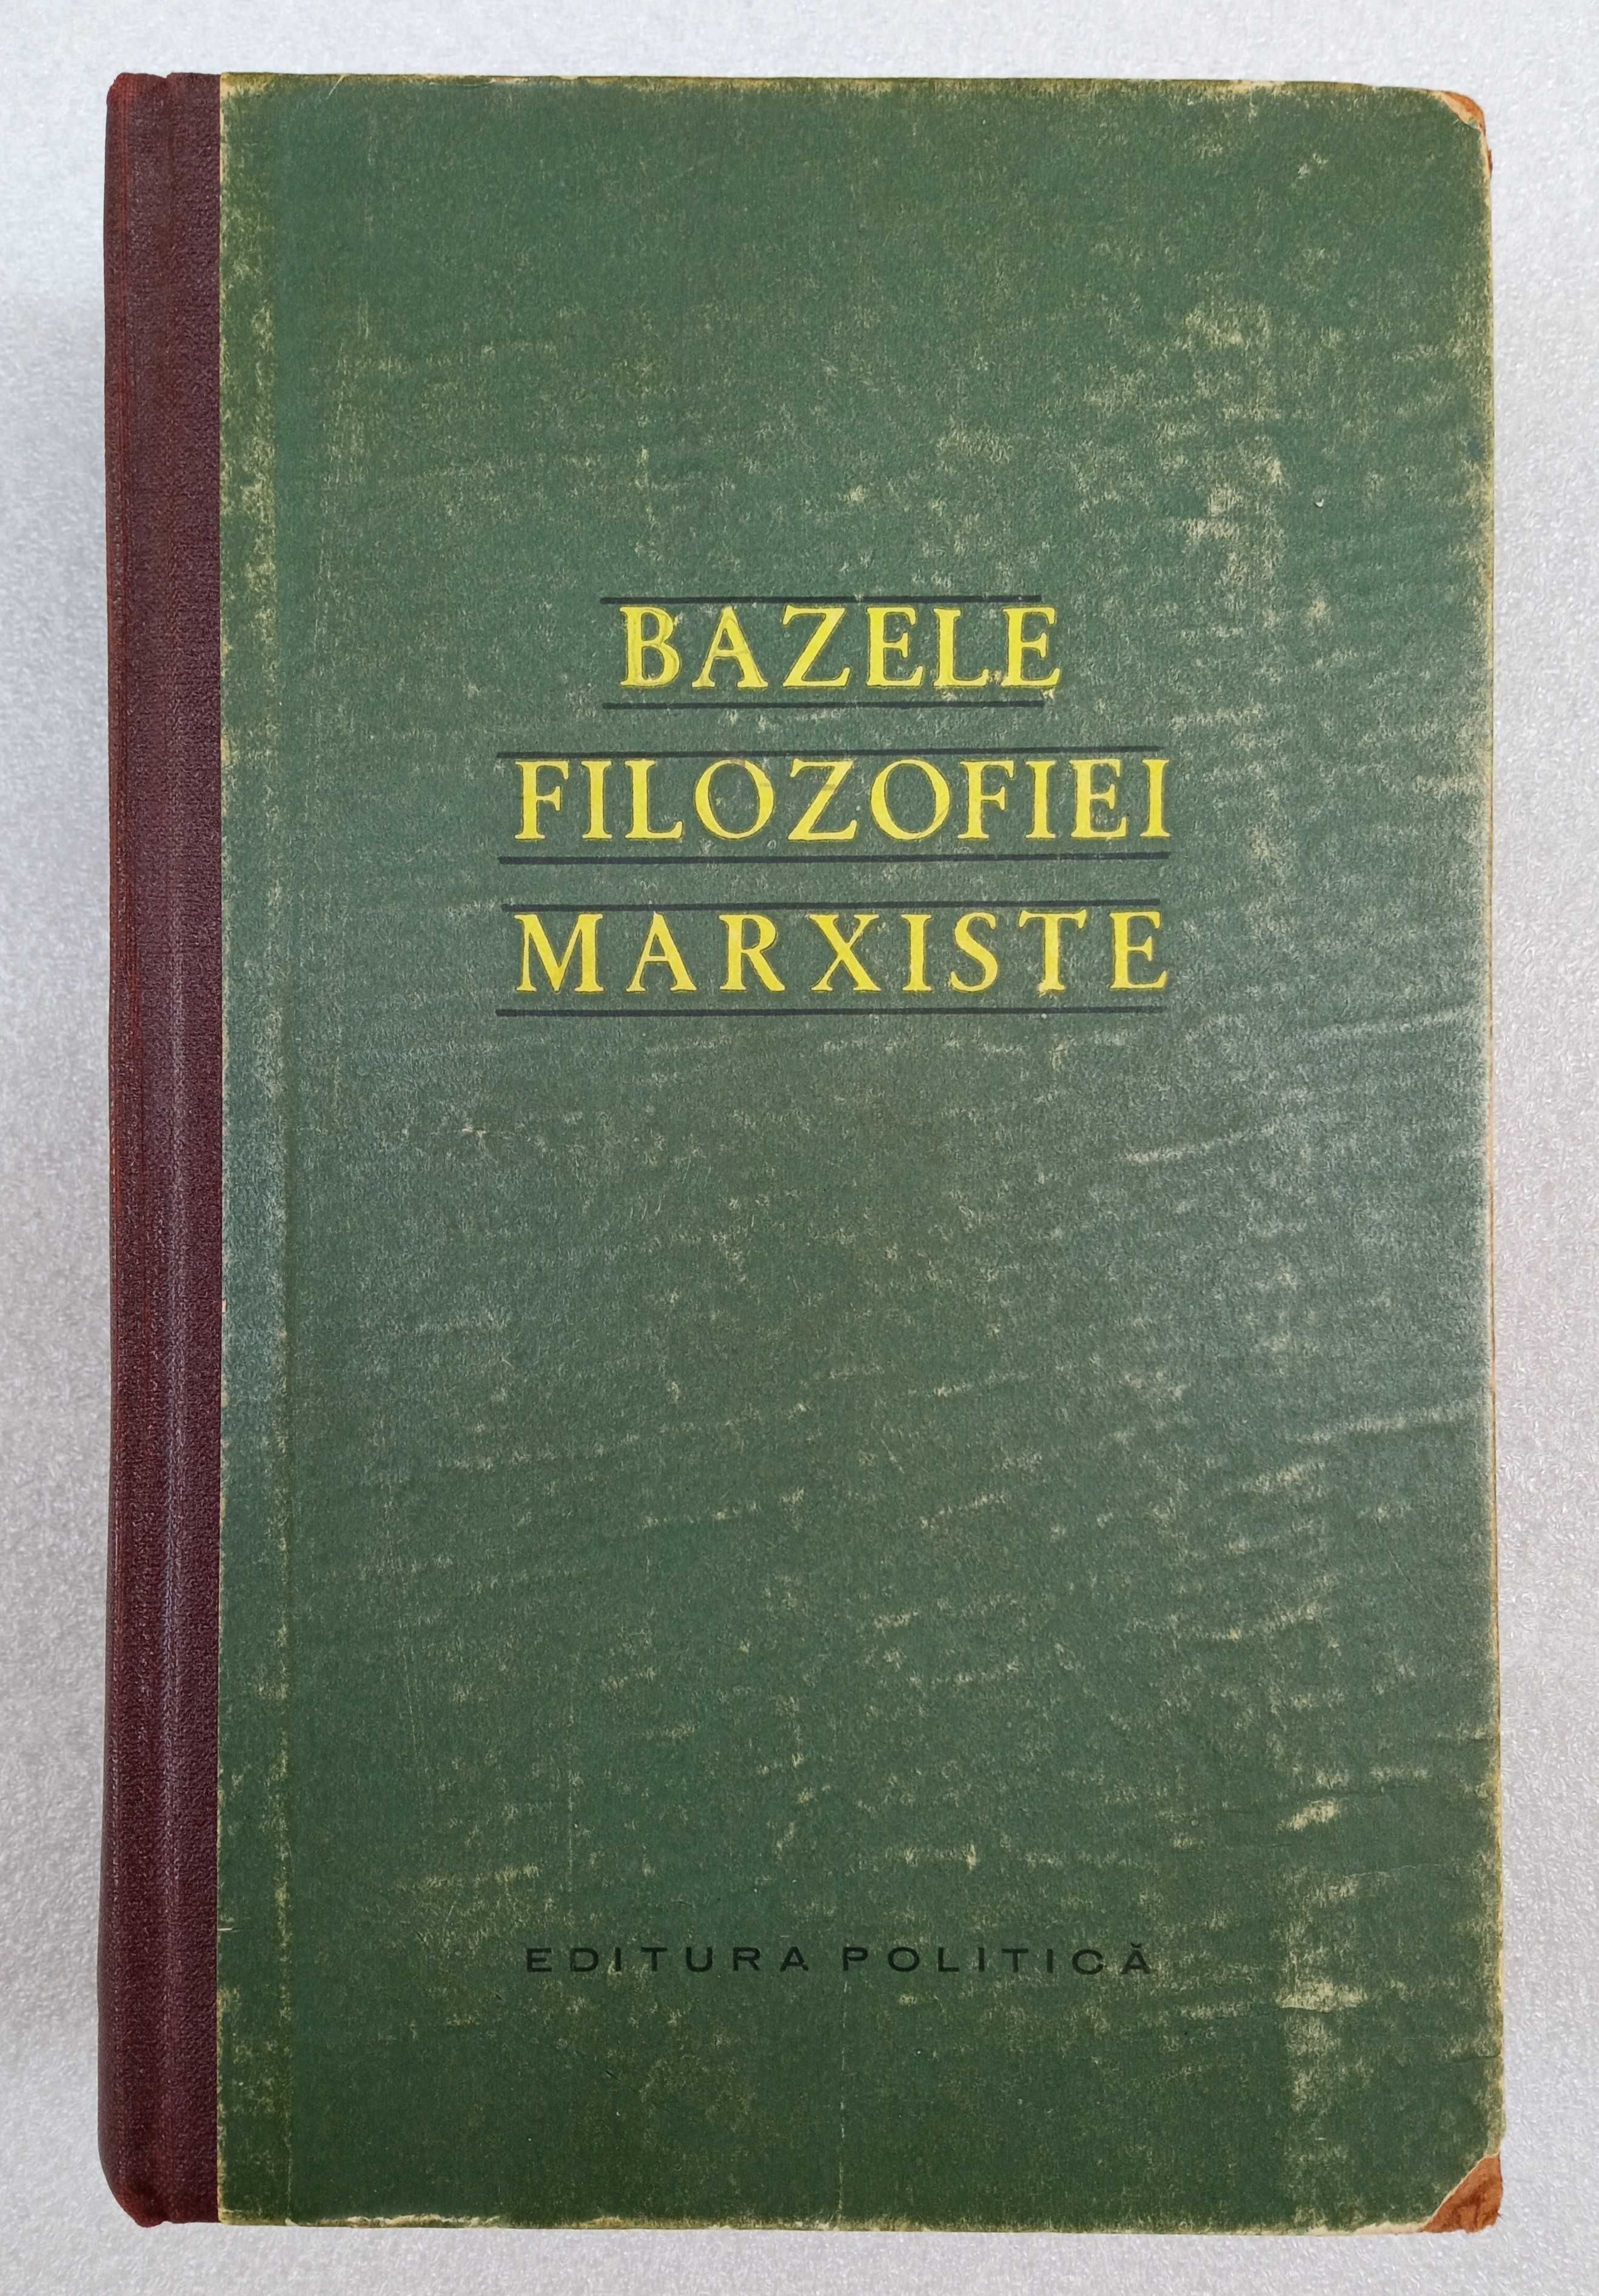 Bazele filozofiei marxiste